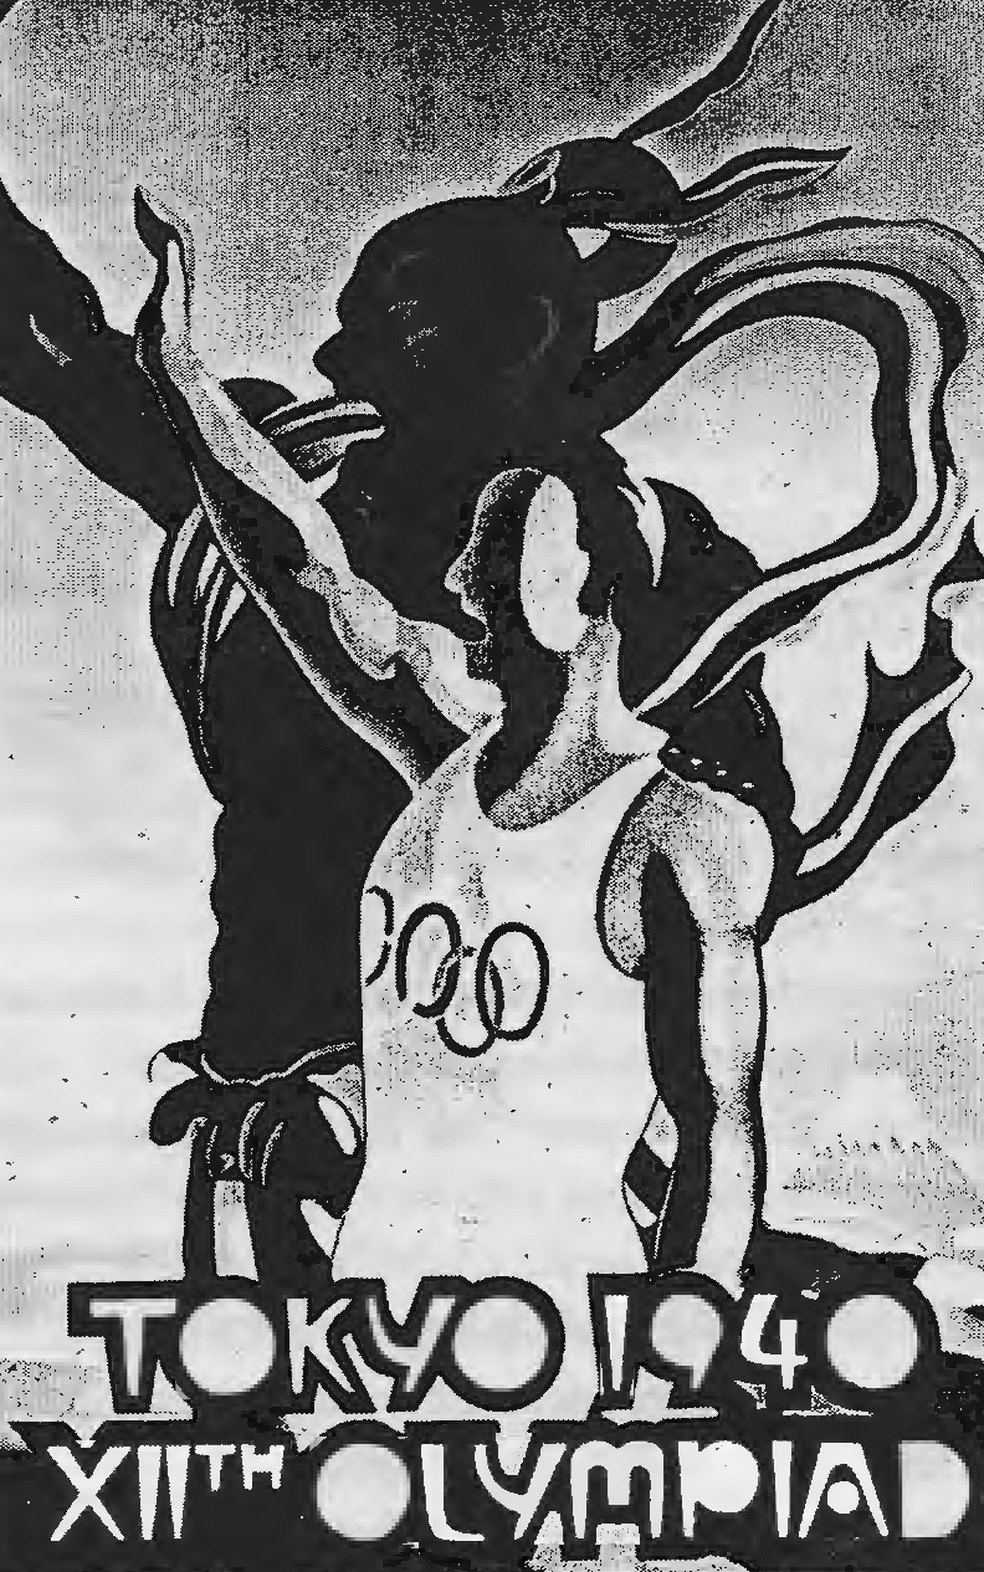 Poster dos Jogos Olímpicos de Tóquio em 1940, cancelados por causa das guerras — Foto: By Wada Sanzō - The Organizing Committee of the XIIth Olympiad, Report of the Organizing Committee on its Work for the XIIth Olympic Games of 1940 in Tokyo until the Relinquishment, Tokio 1940, p. 114., Domínio público